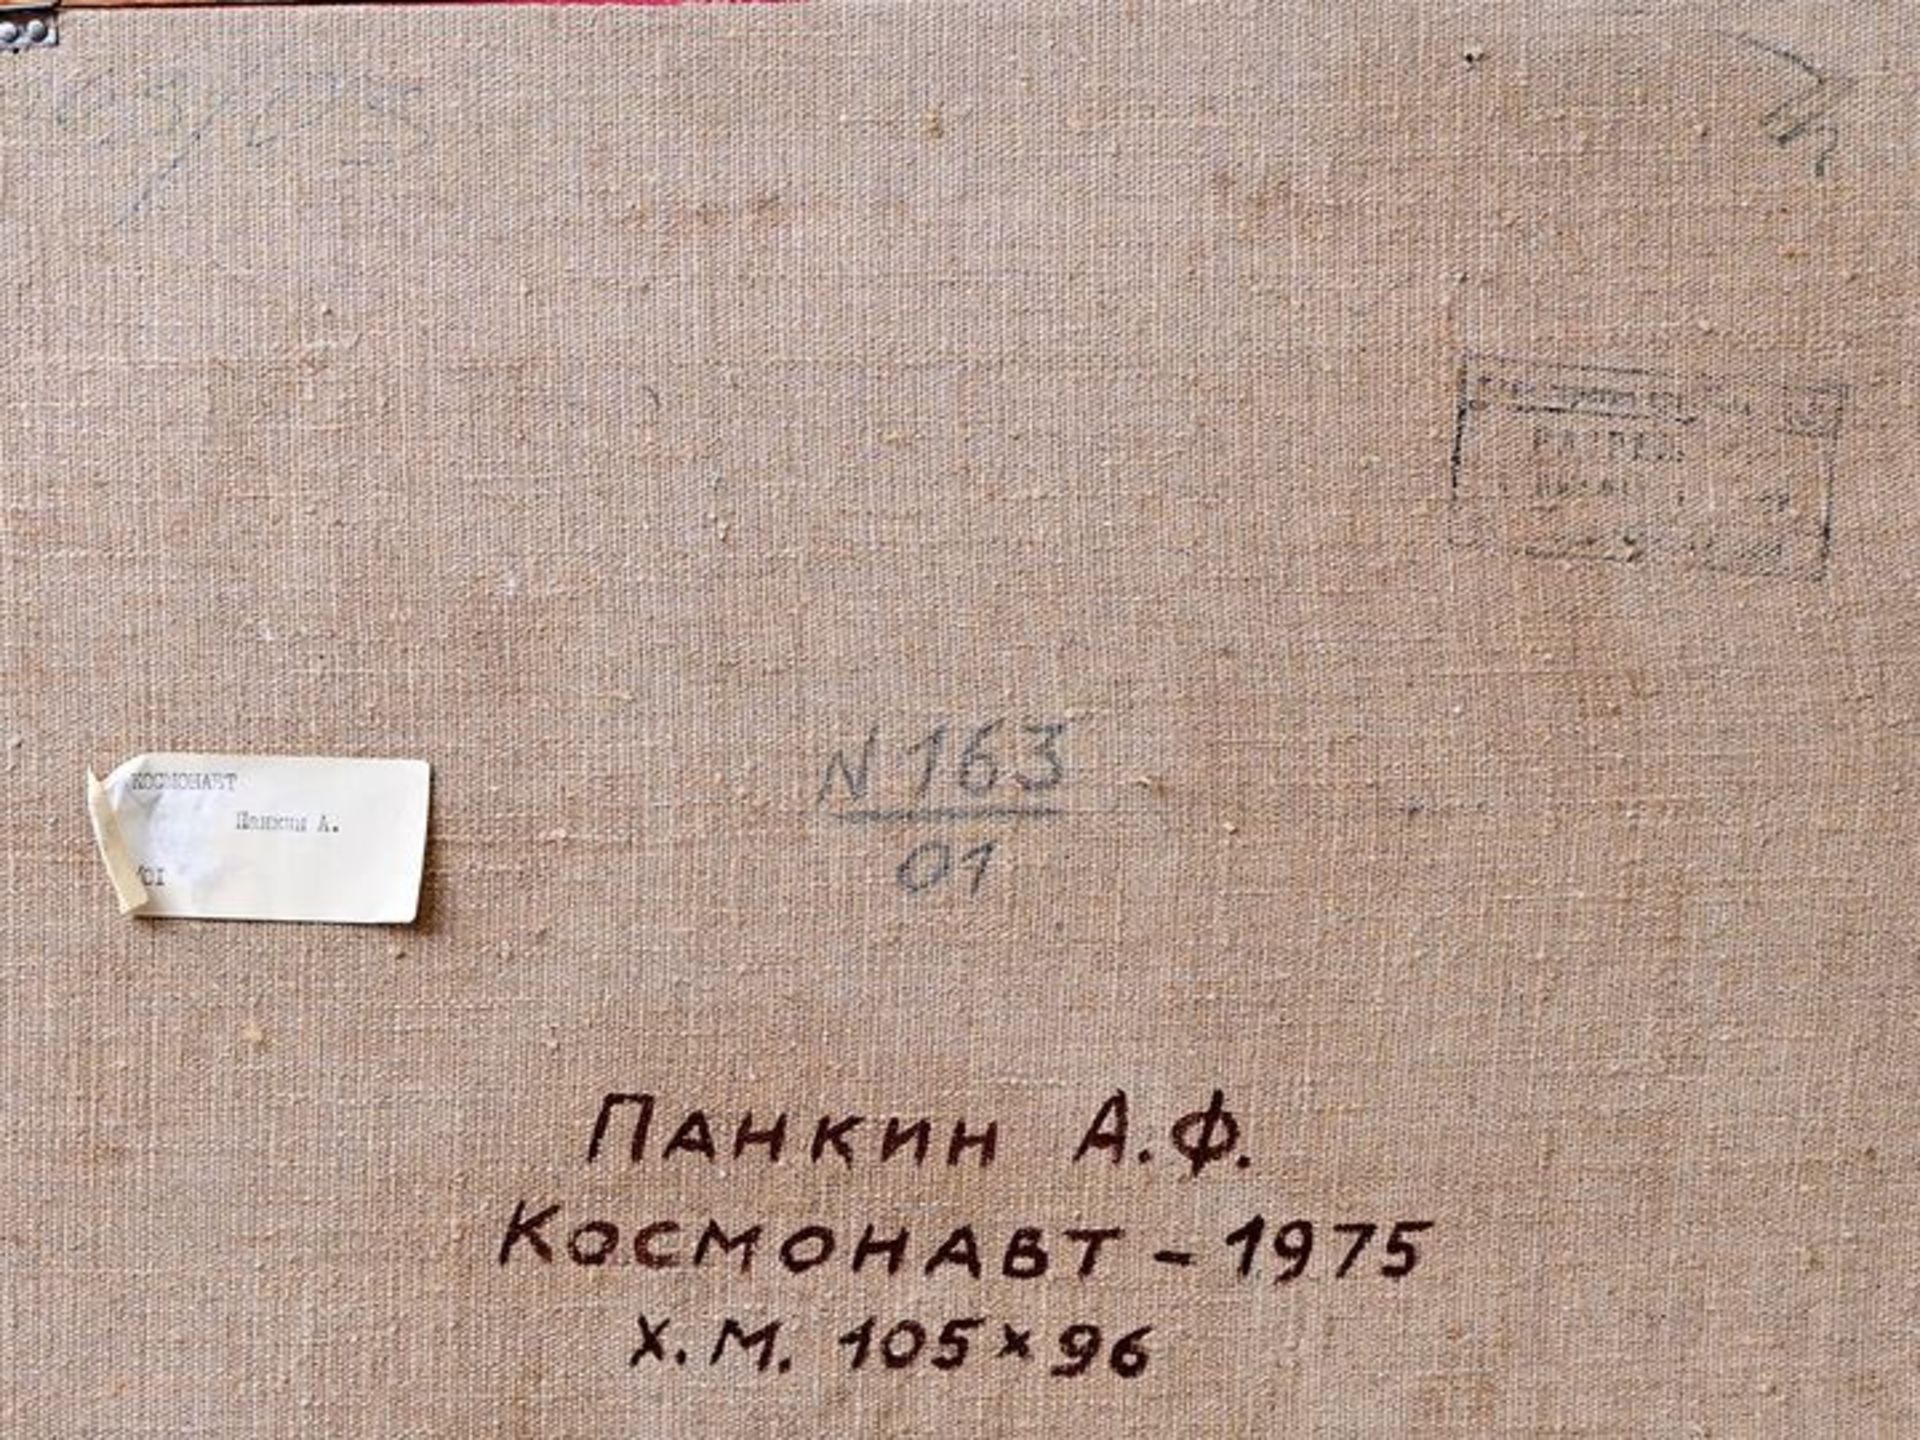 Pankin, A.: Kosmonaut / Cosmonaut - Image 3 of 5